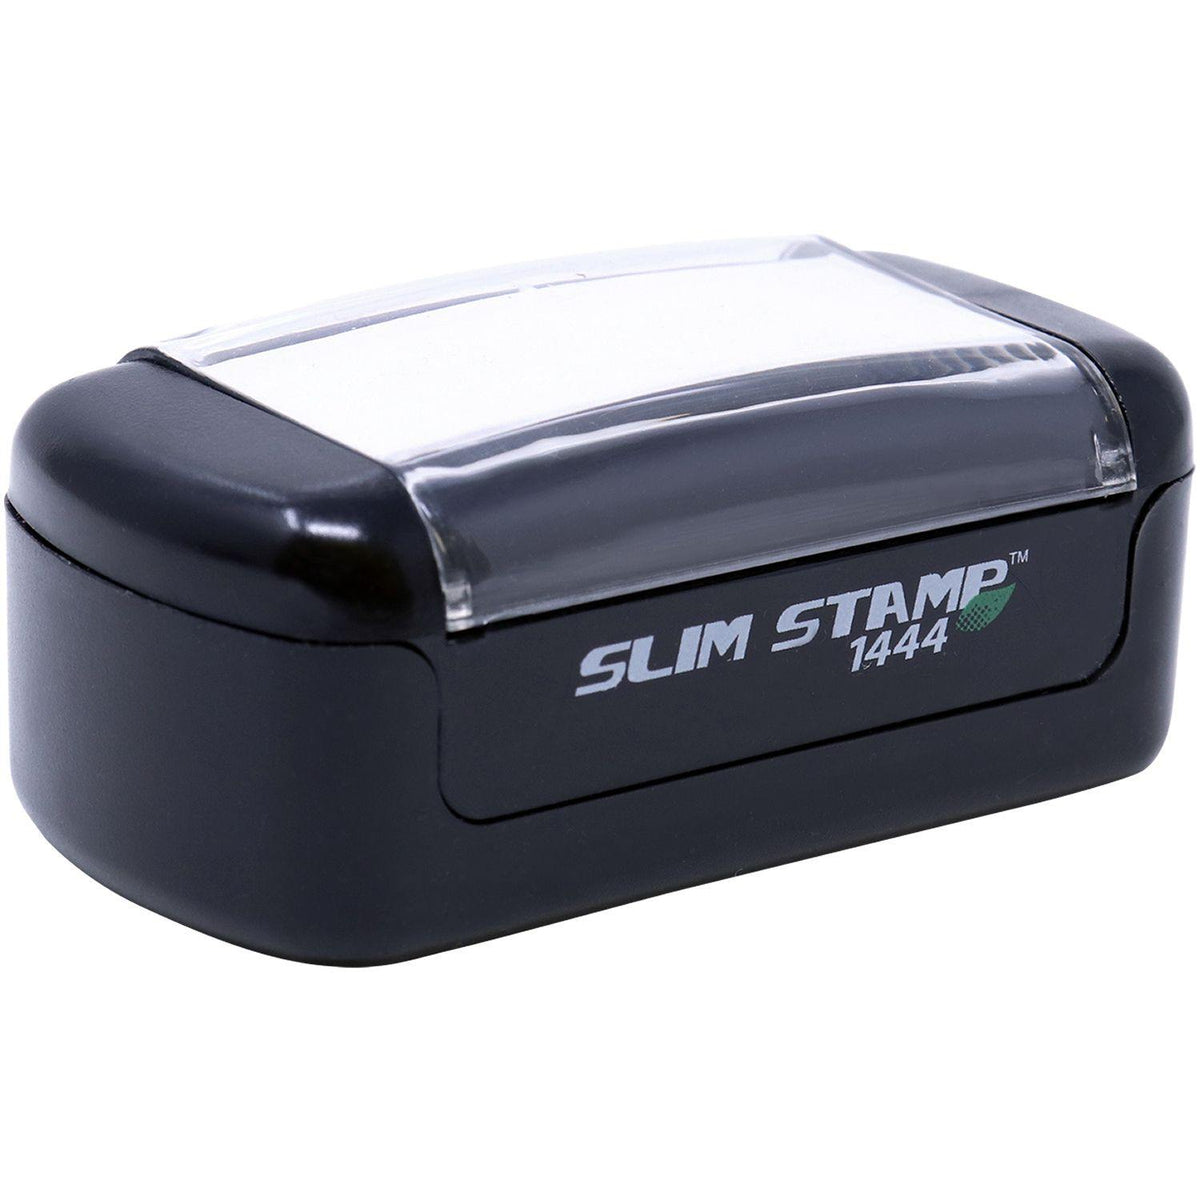 Slim Pre Inked Capitation Stamp - Engineer Seal Stamps - Brand_Slim, Impression Size_Small, Stamp Type_Pre-Inked Stamp, Type of Use_Finance, Type of Use_Medical Office